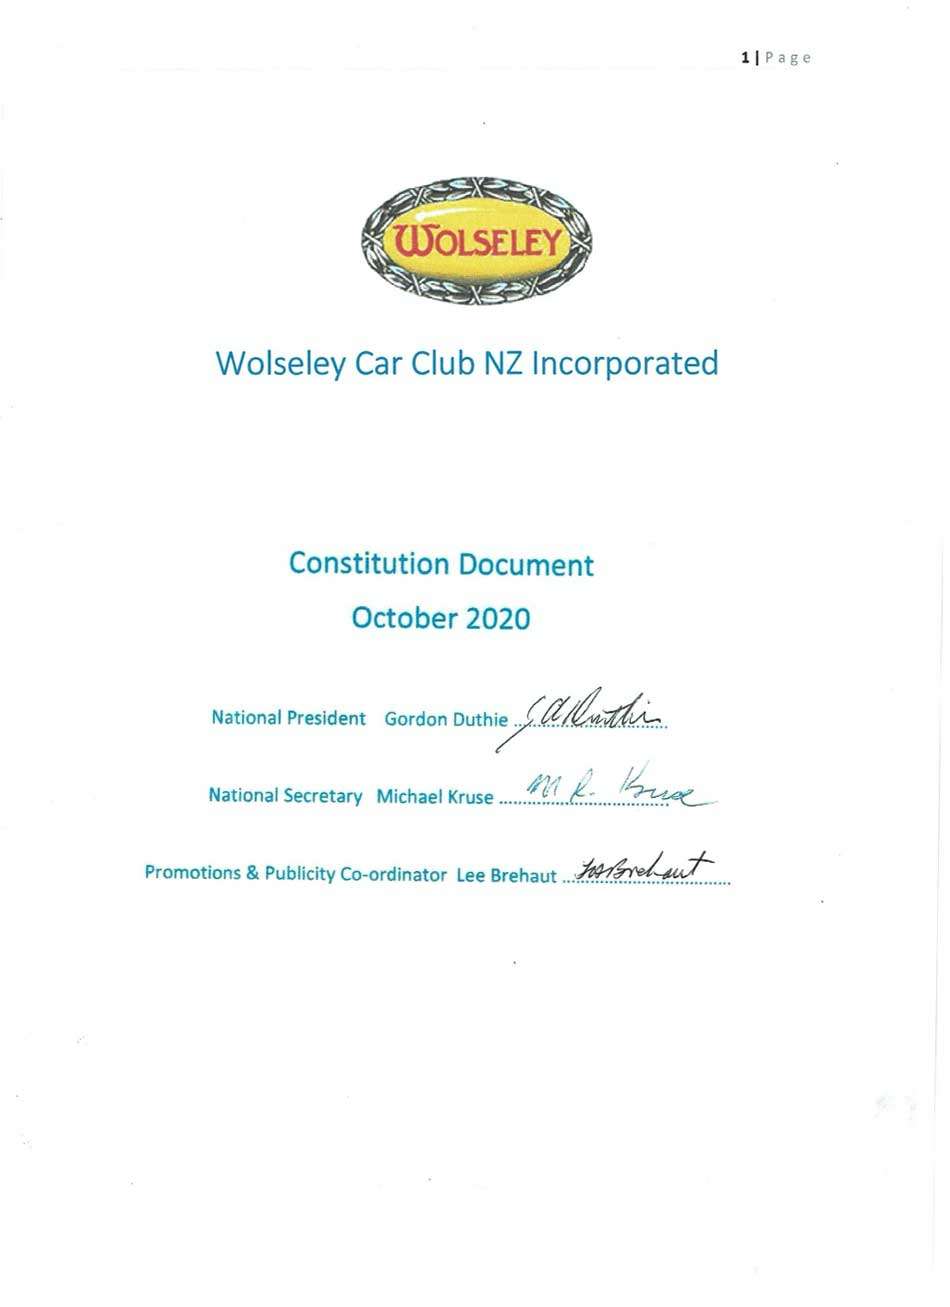 Wolseley Car Club NZ Inc Constitution October 2020